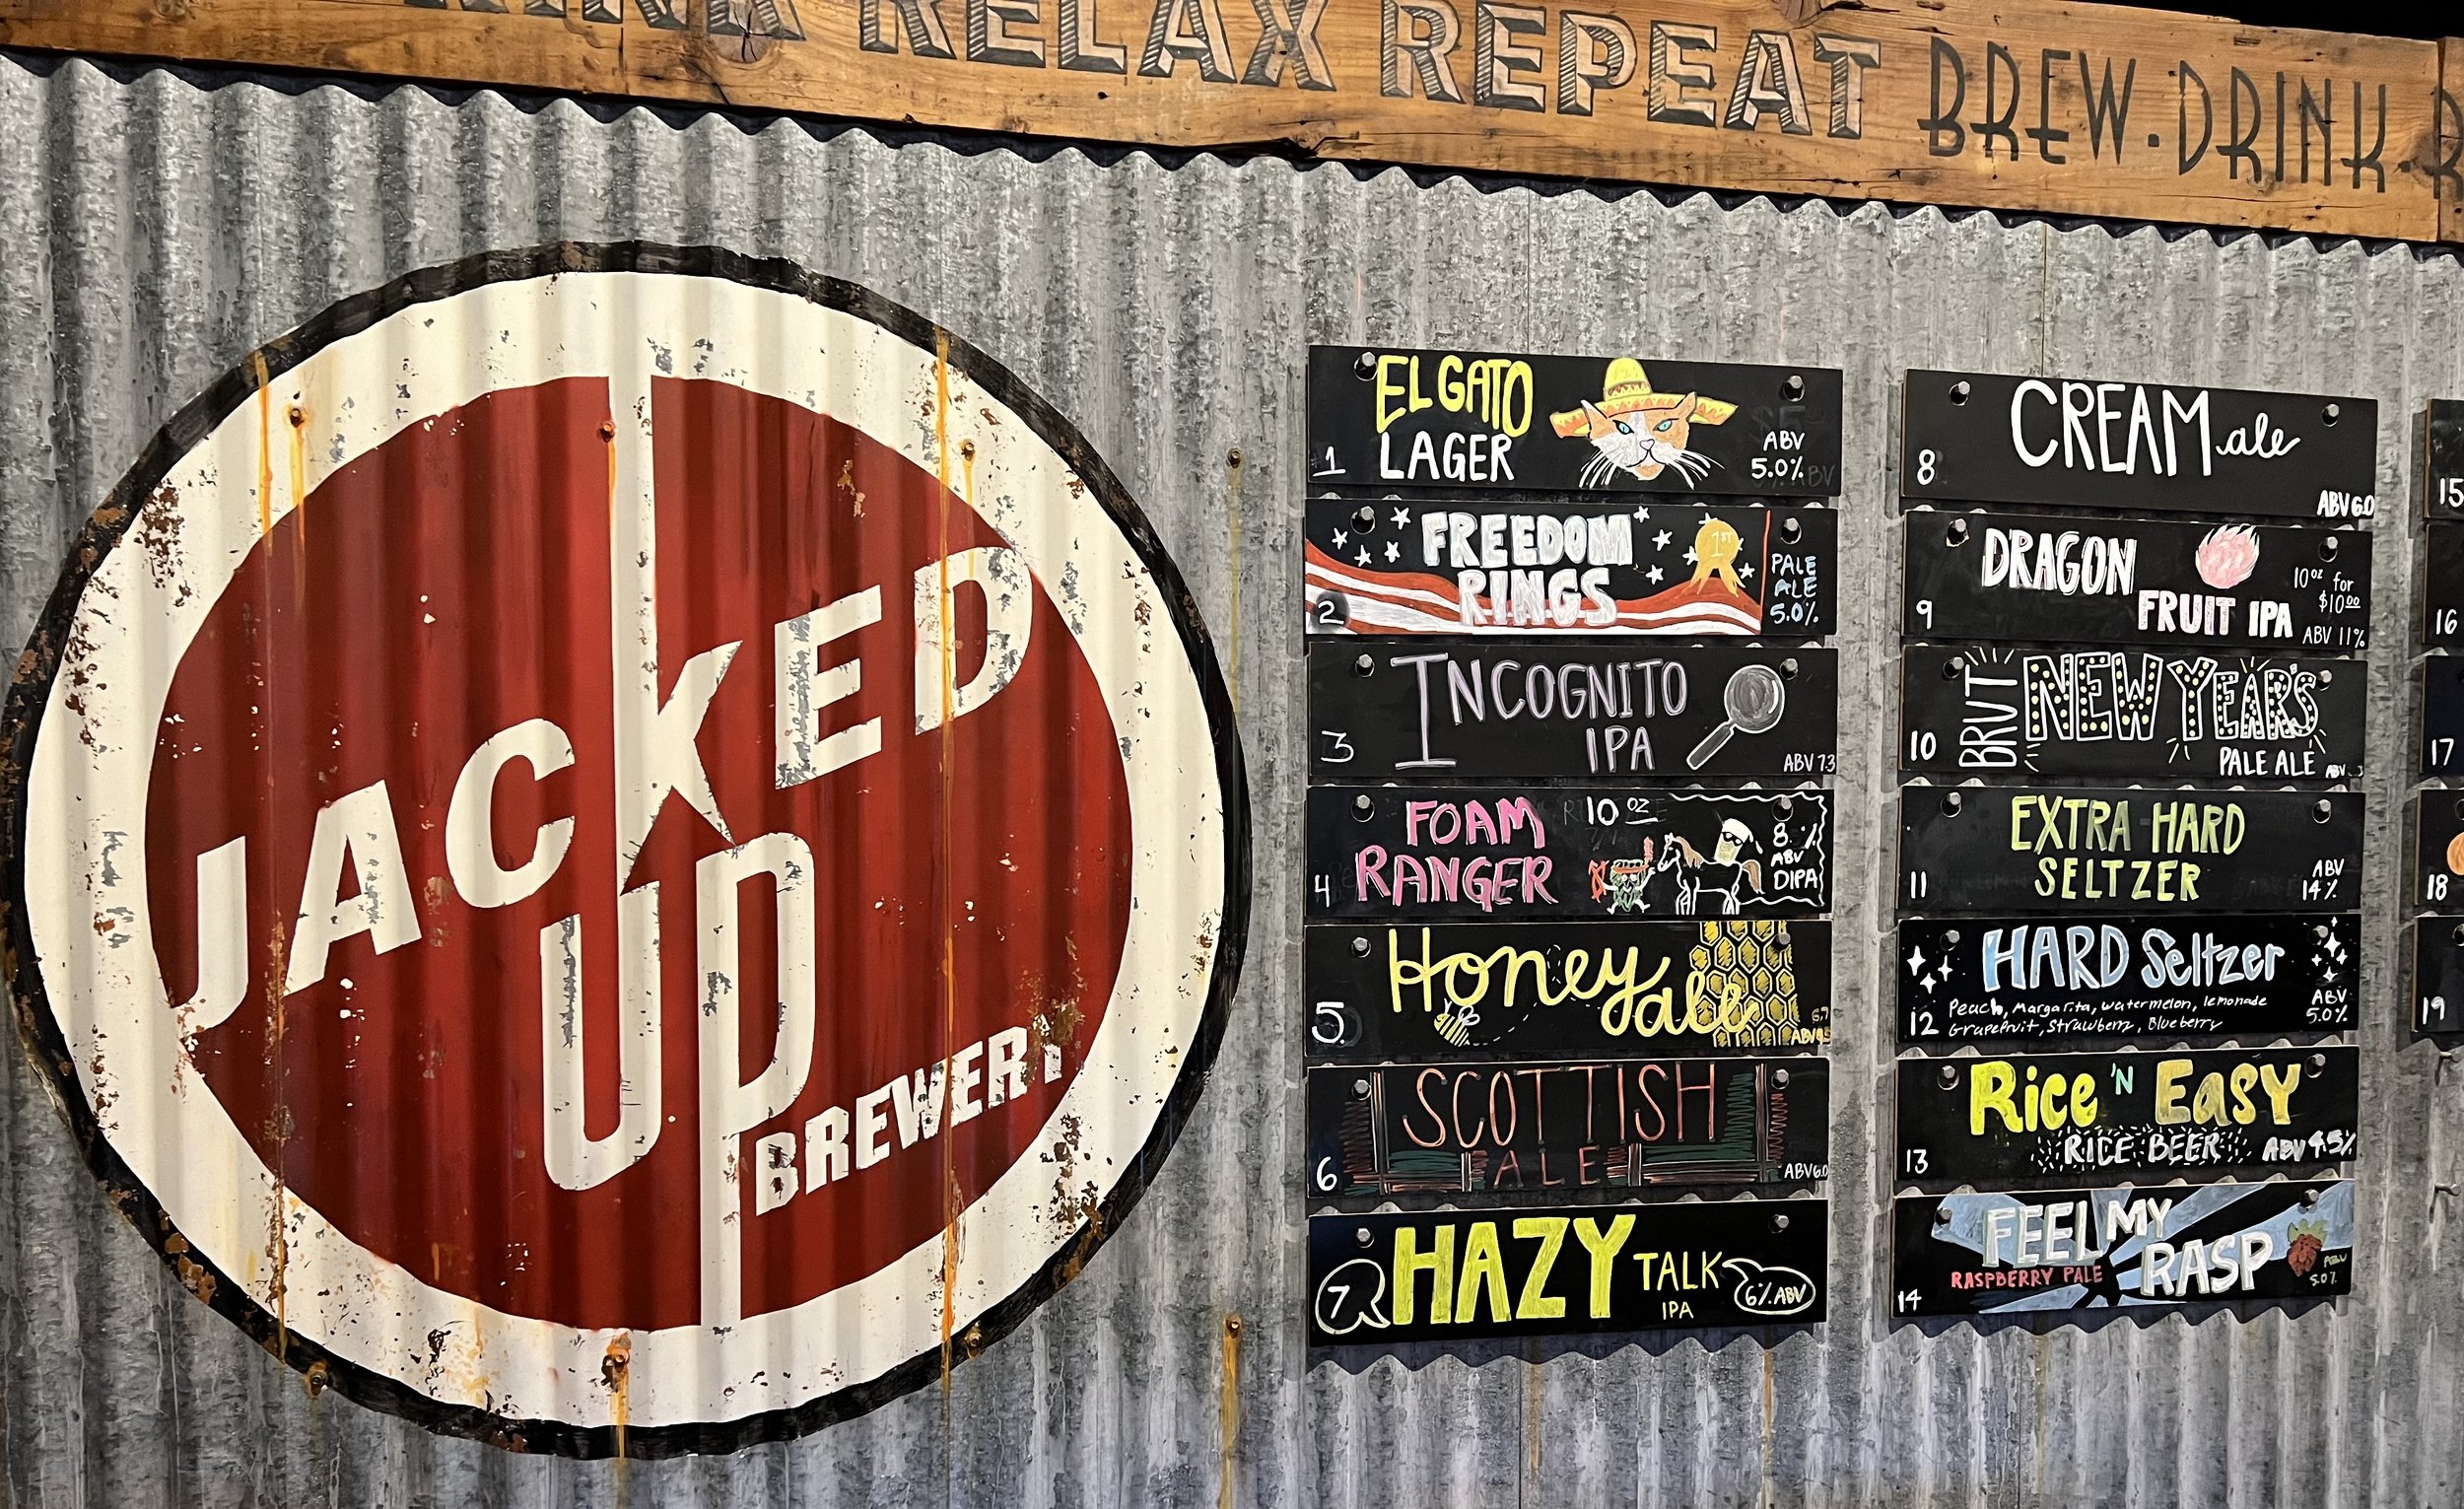 Beer Release / Big Iron Happy Hour – Jacked Up Brewery